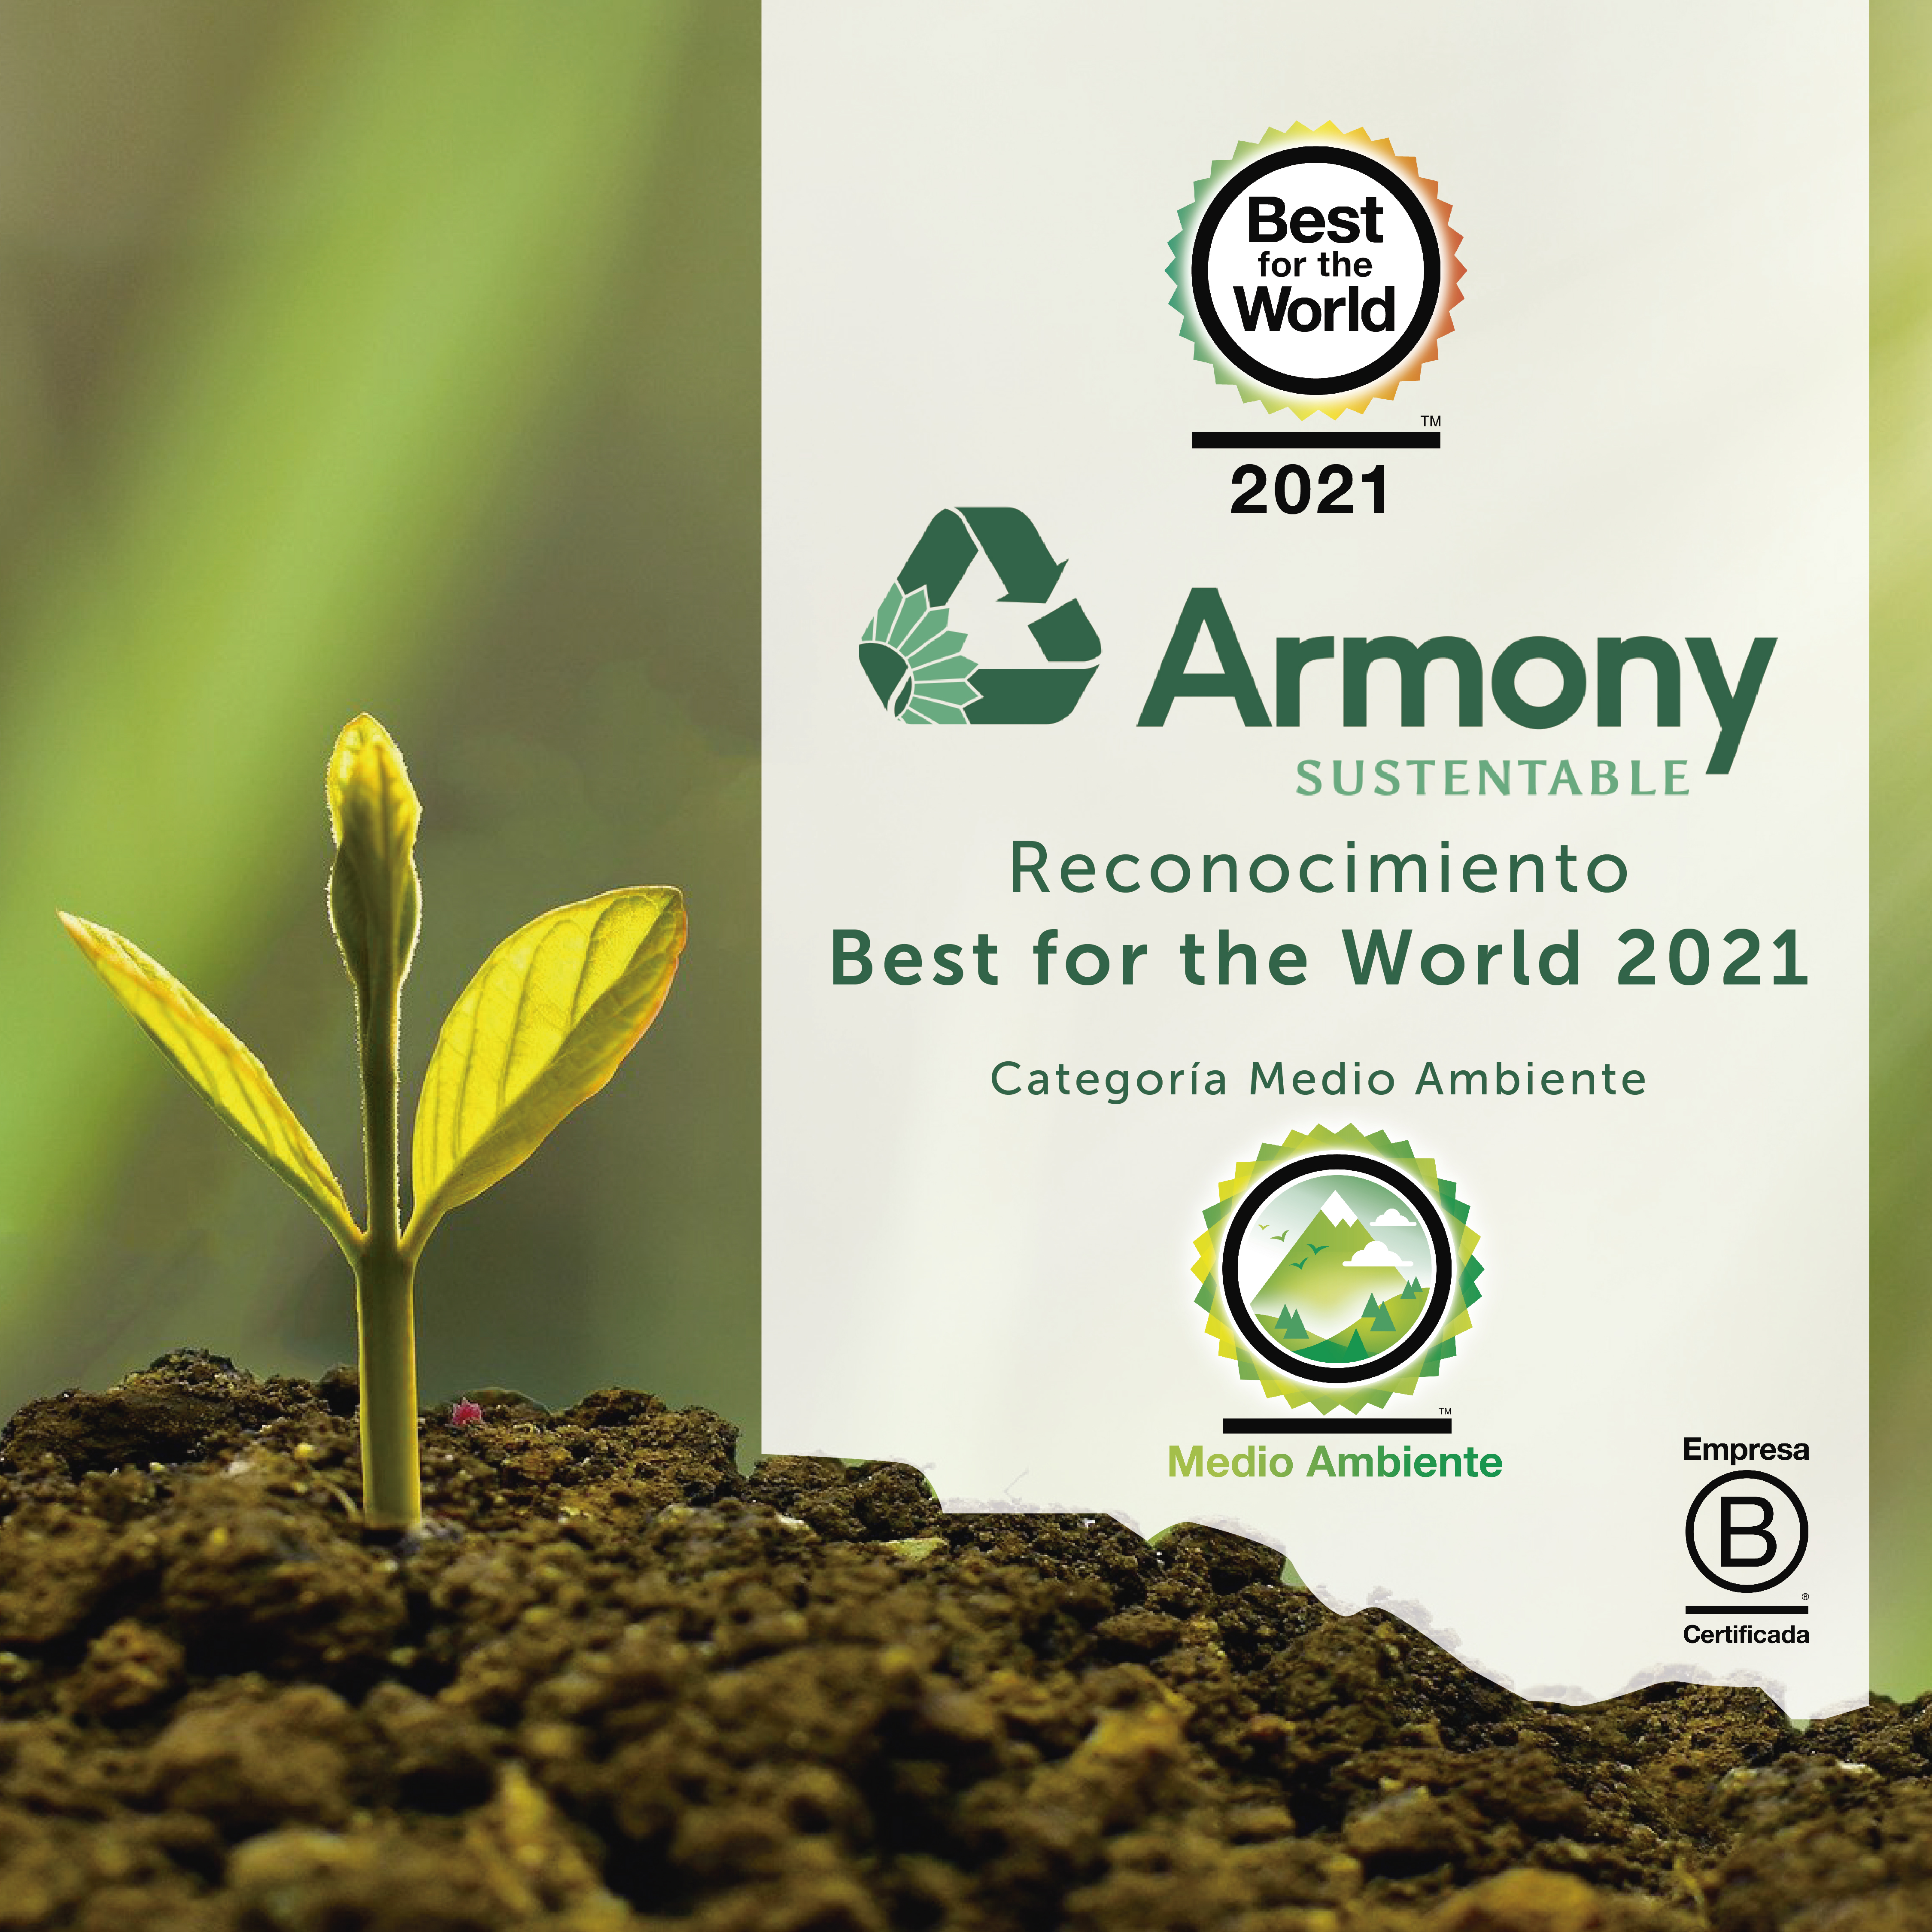 Armony reconocida como empresa "Best for the World" (BFTW) 2021